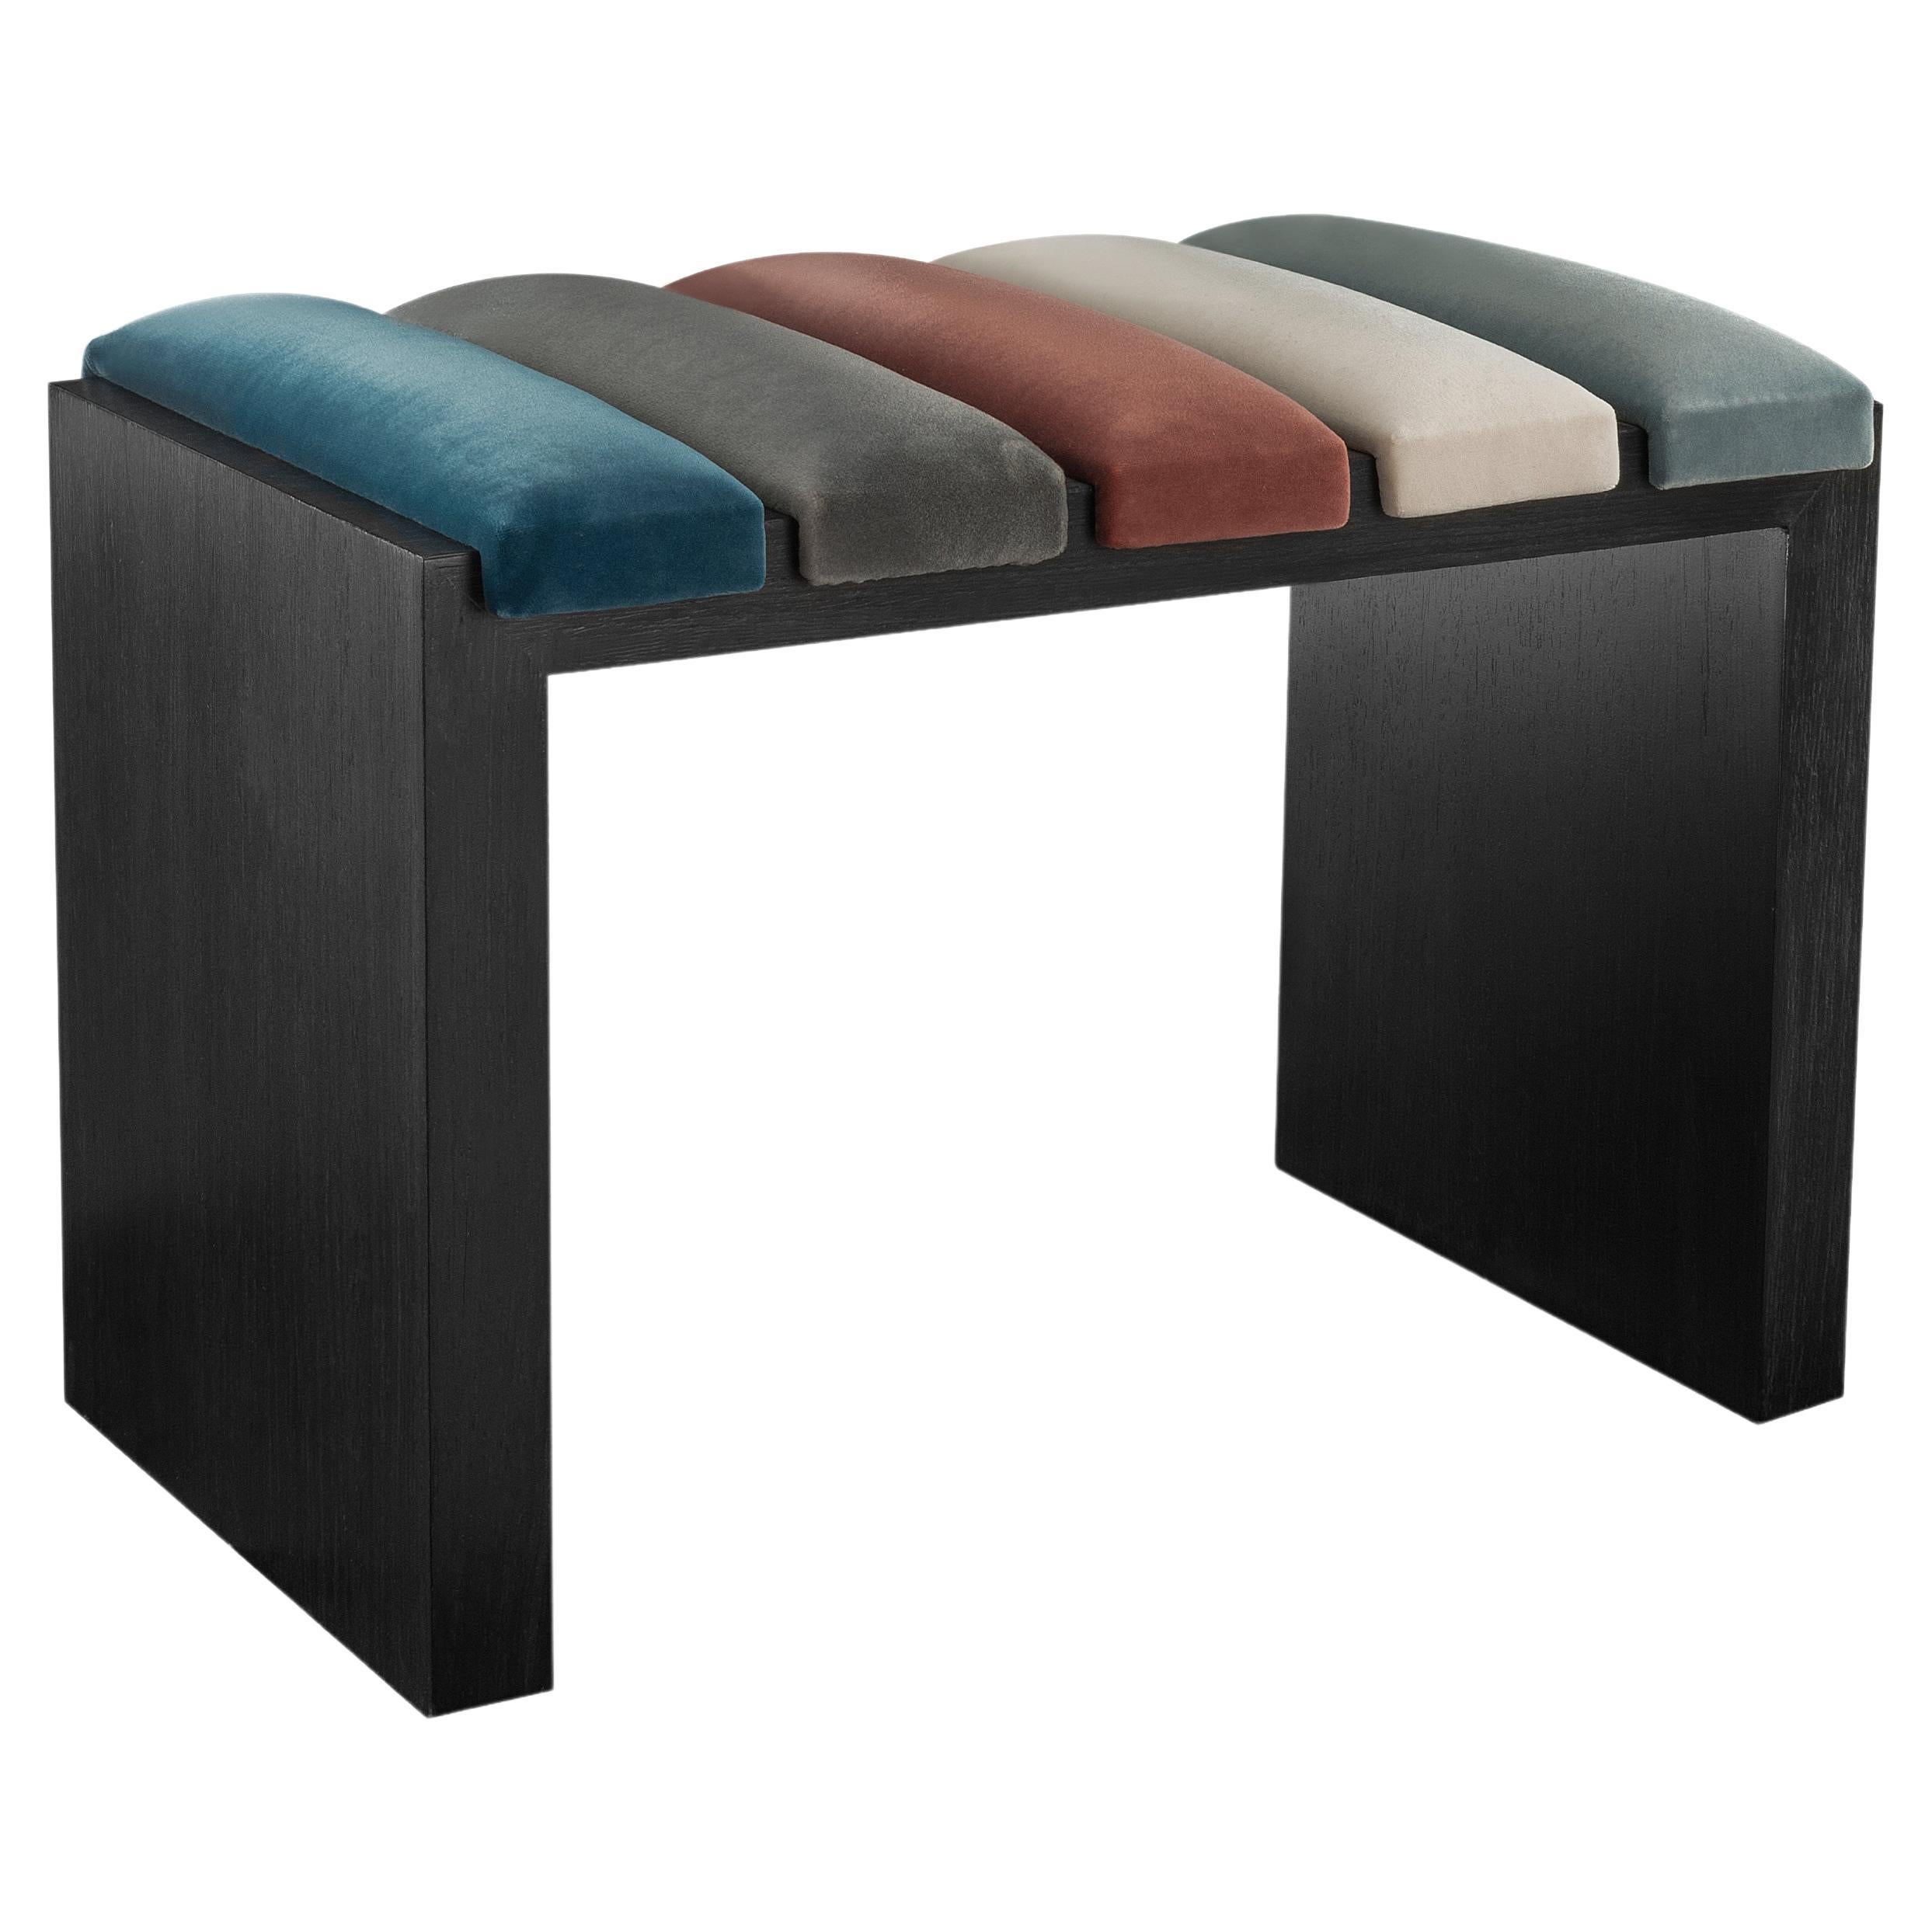 Piano Black wenge veneer and velvet fabric stool For Sale